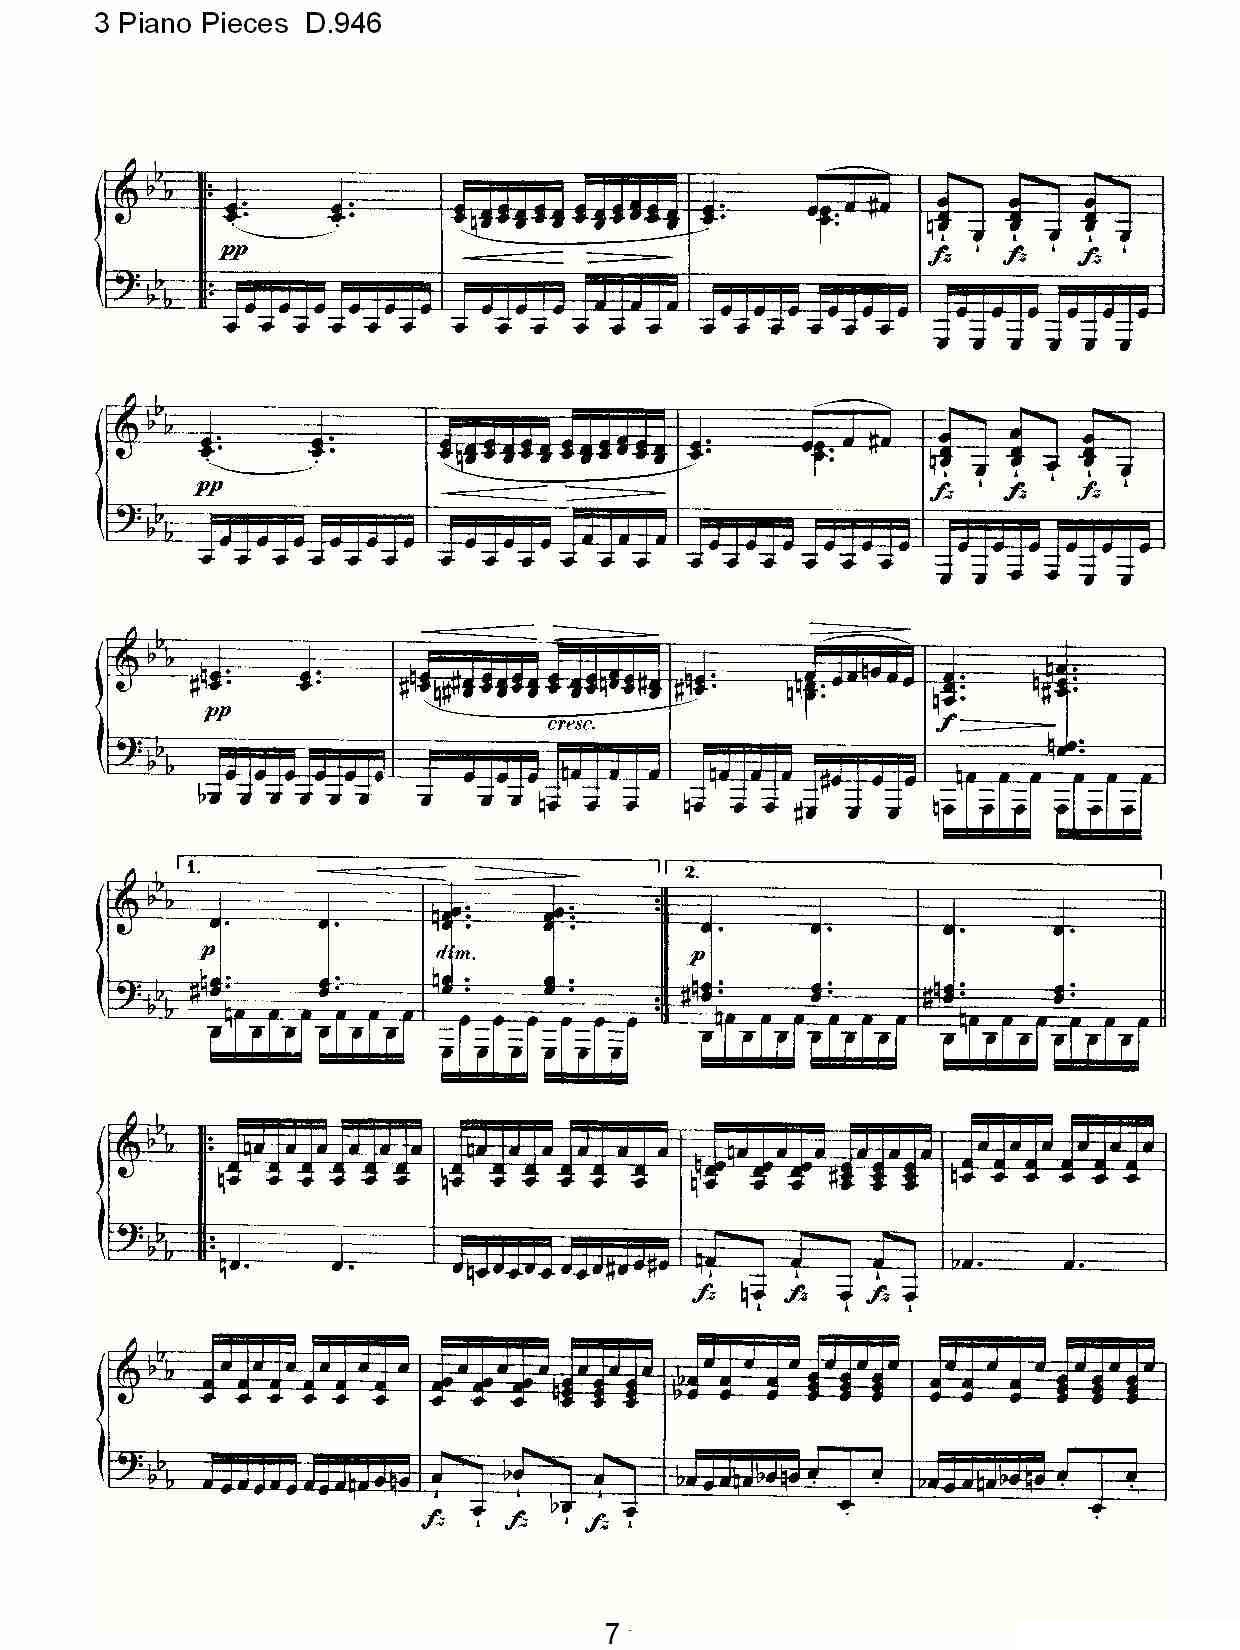 3 Piano Pieces D.946（钢琴三联奏D.946）钢琴曲谱（图7）